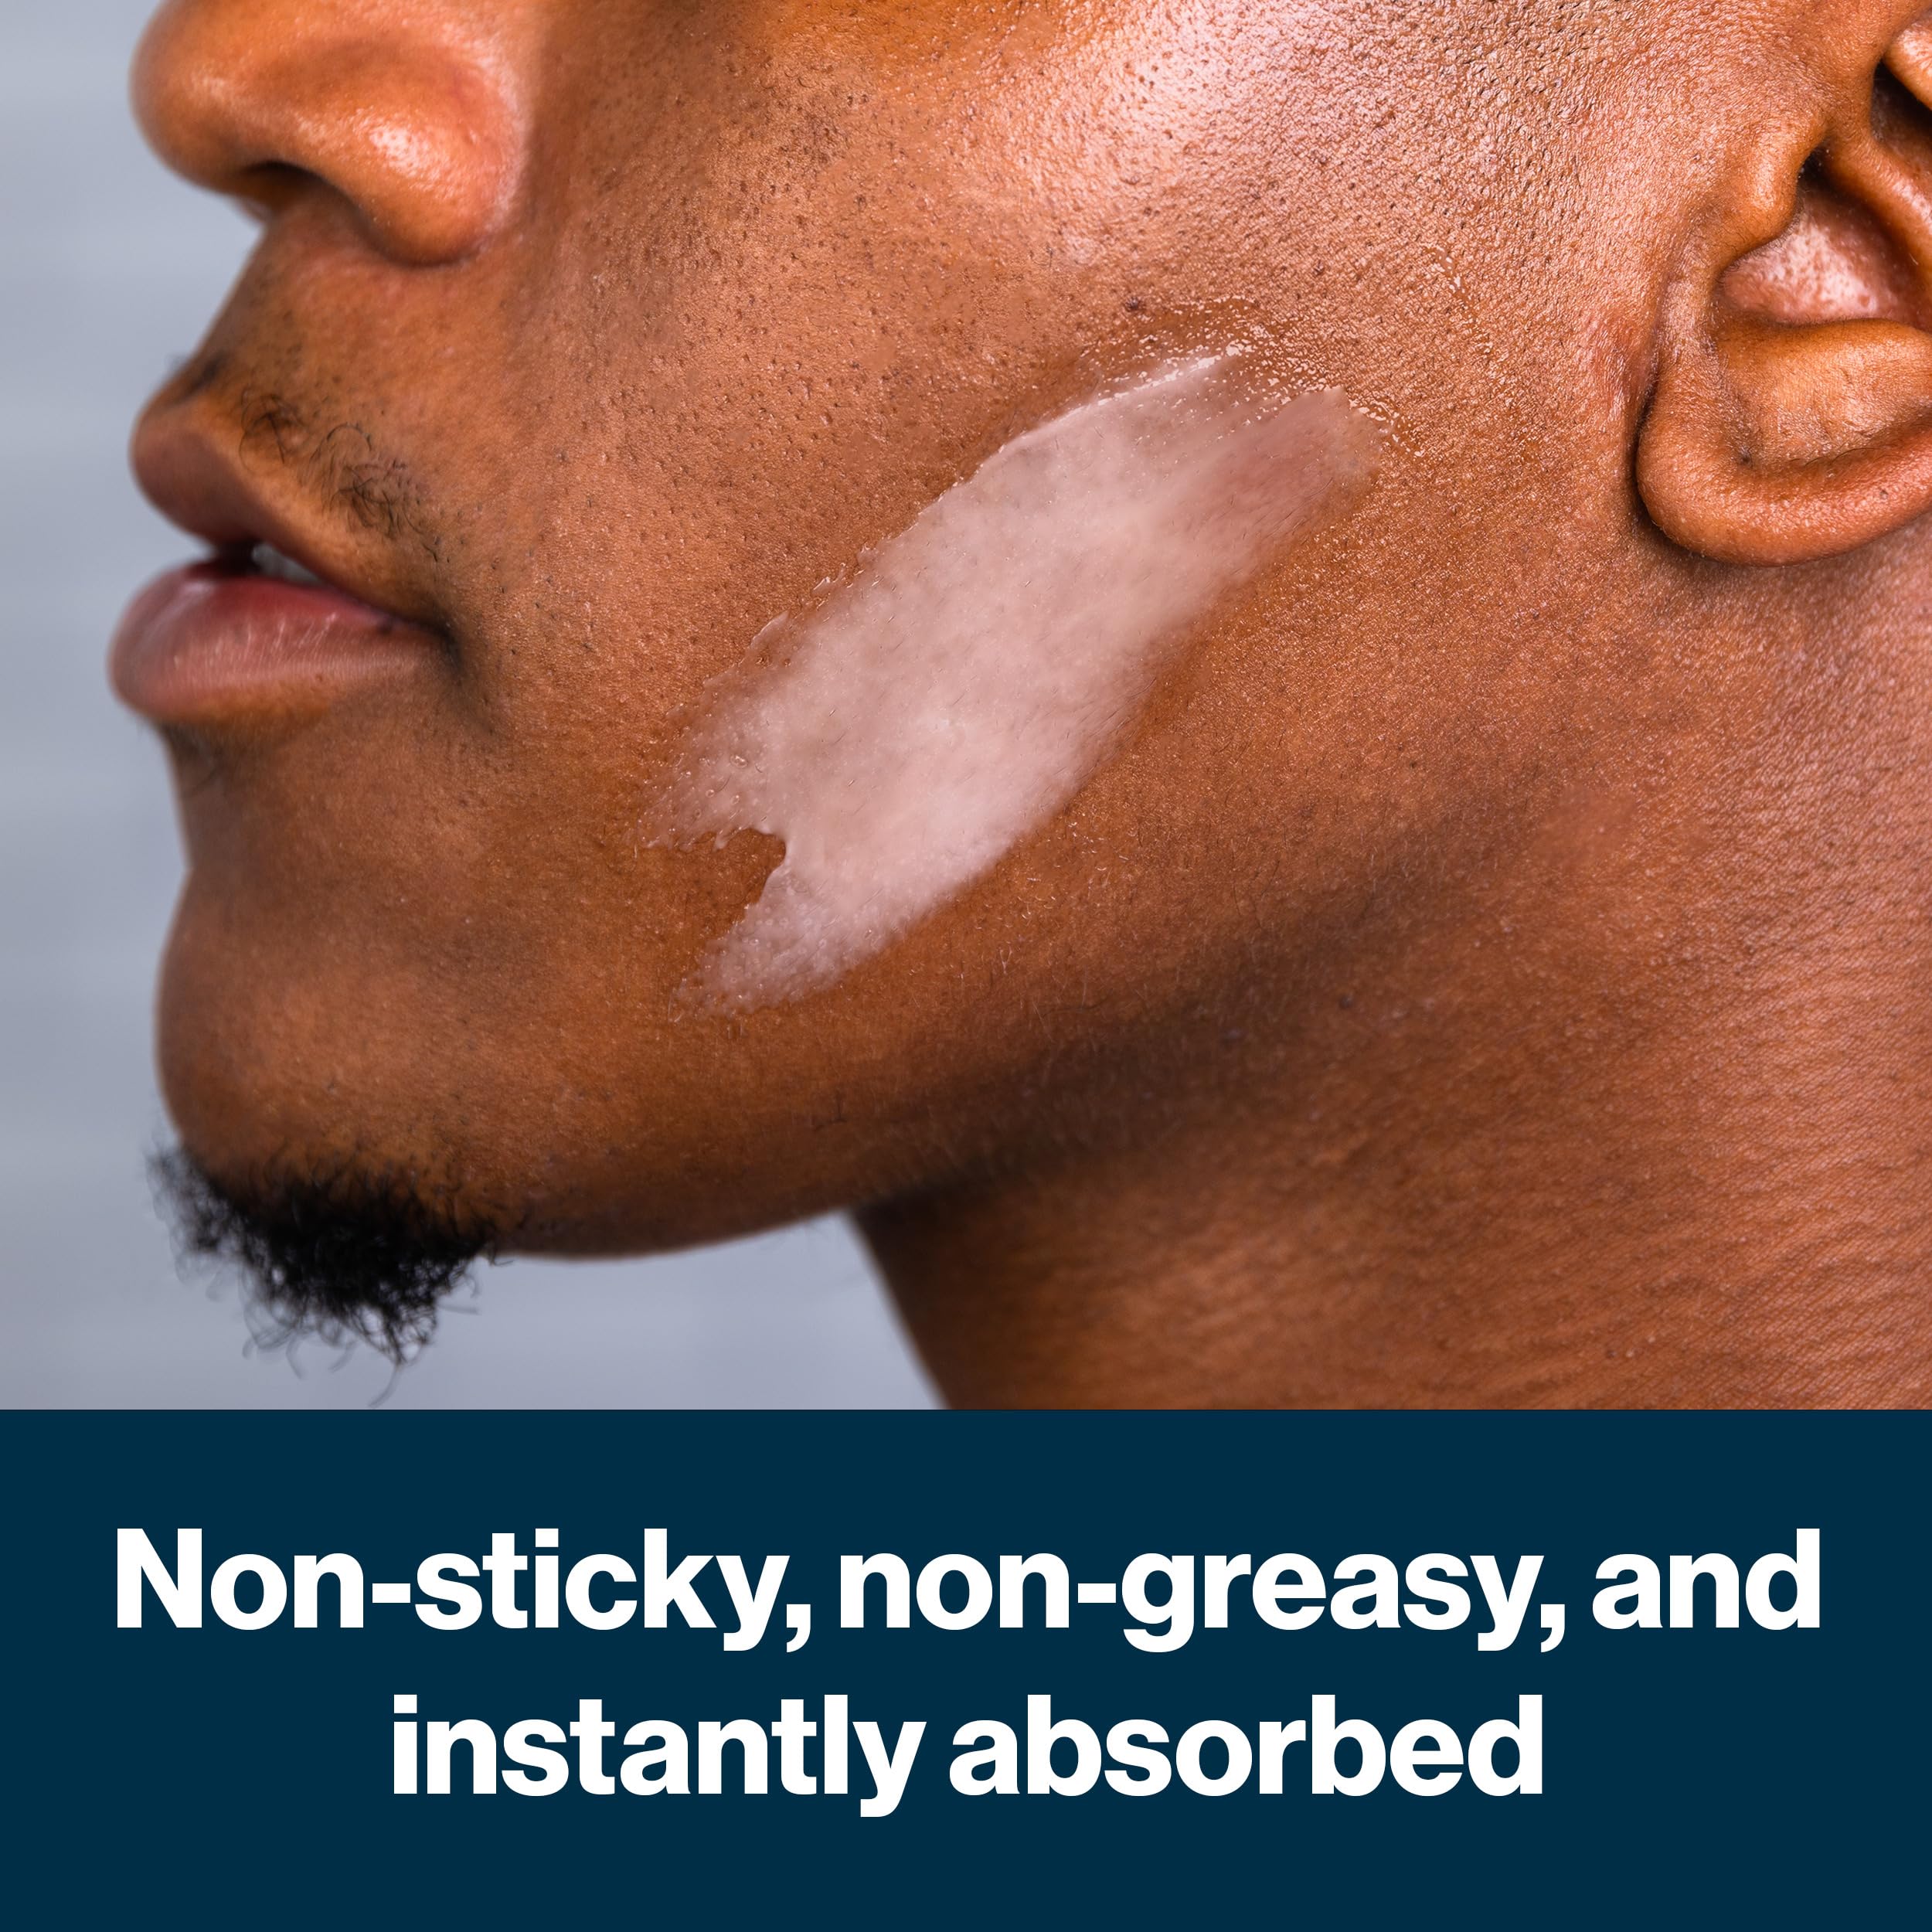 Gillette SkinGuard Face Moisturizer for Men, 3.4 oz Skin Restoring Moisturizer with Shea Butter and Vitamin E